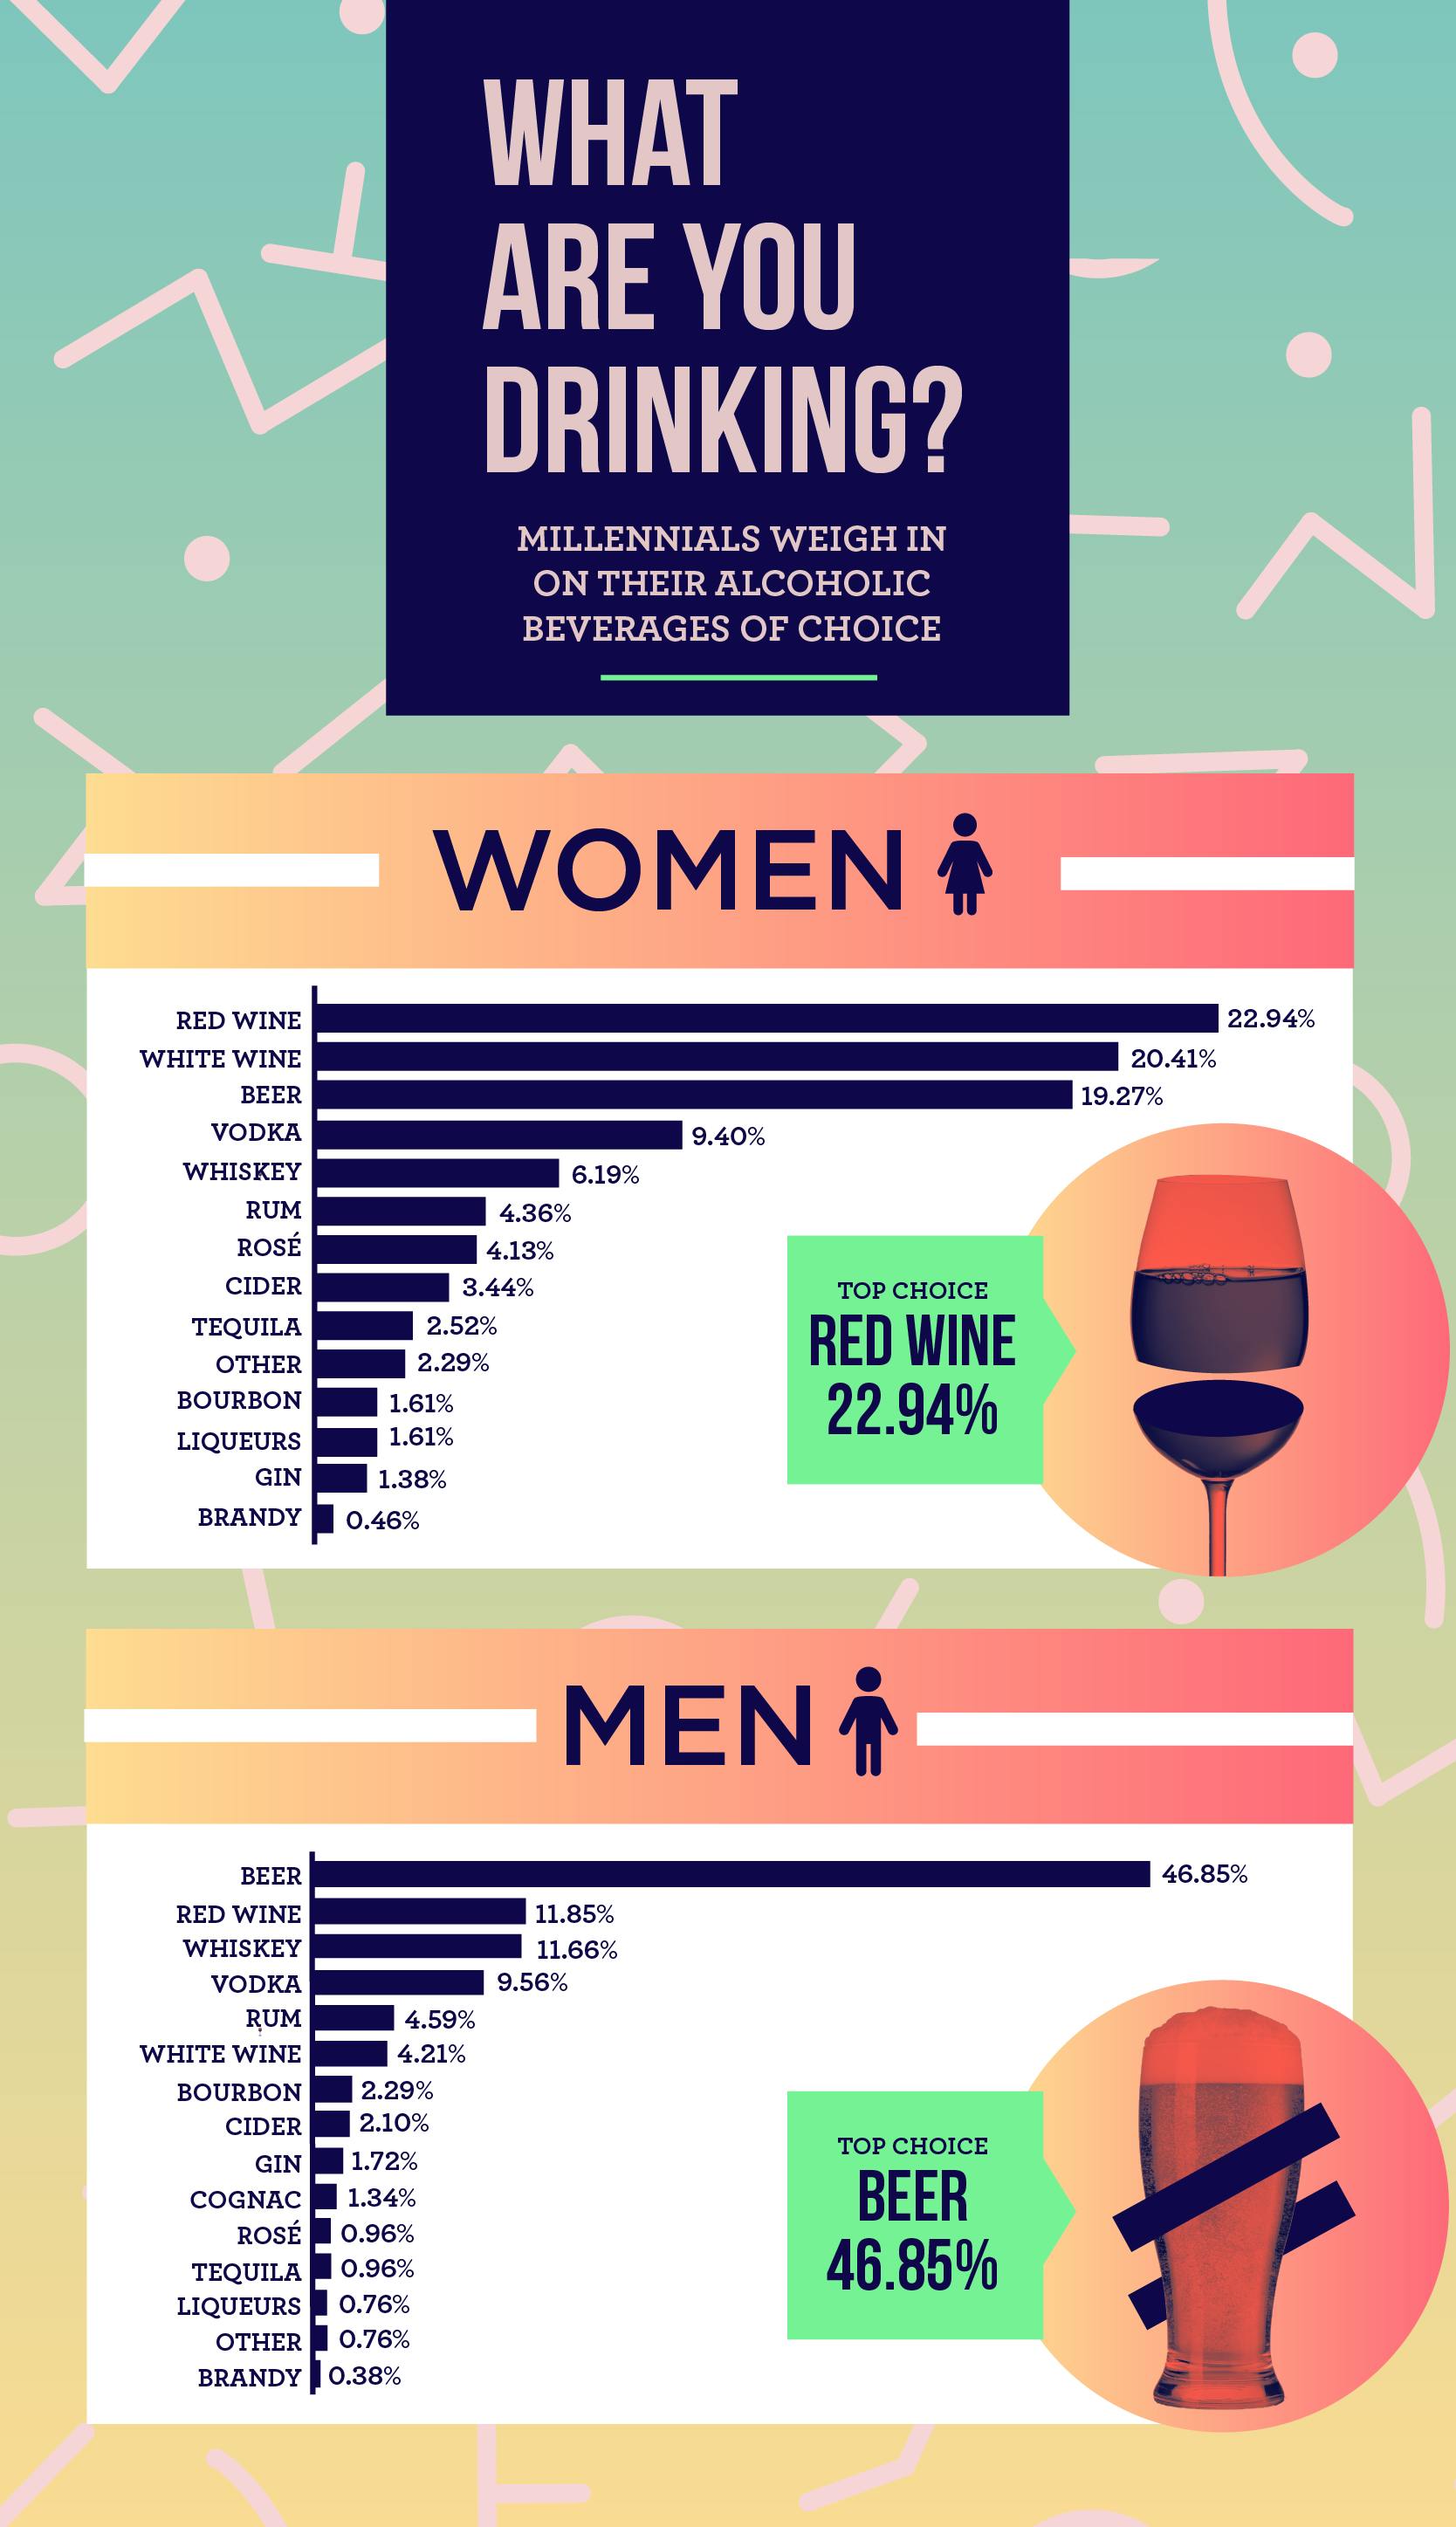 A new study suggests millennial men prefer beer whereas millennial women prefer wine.